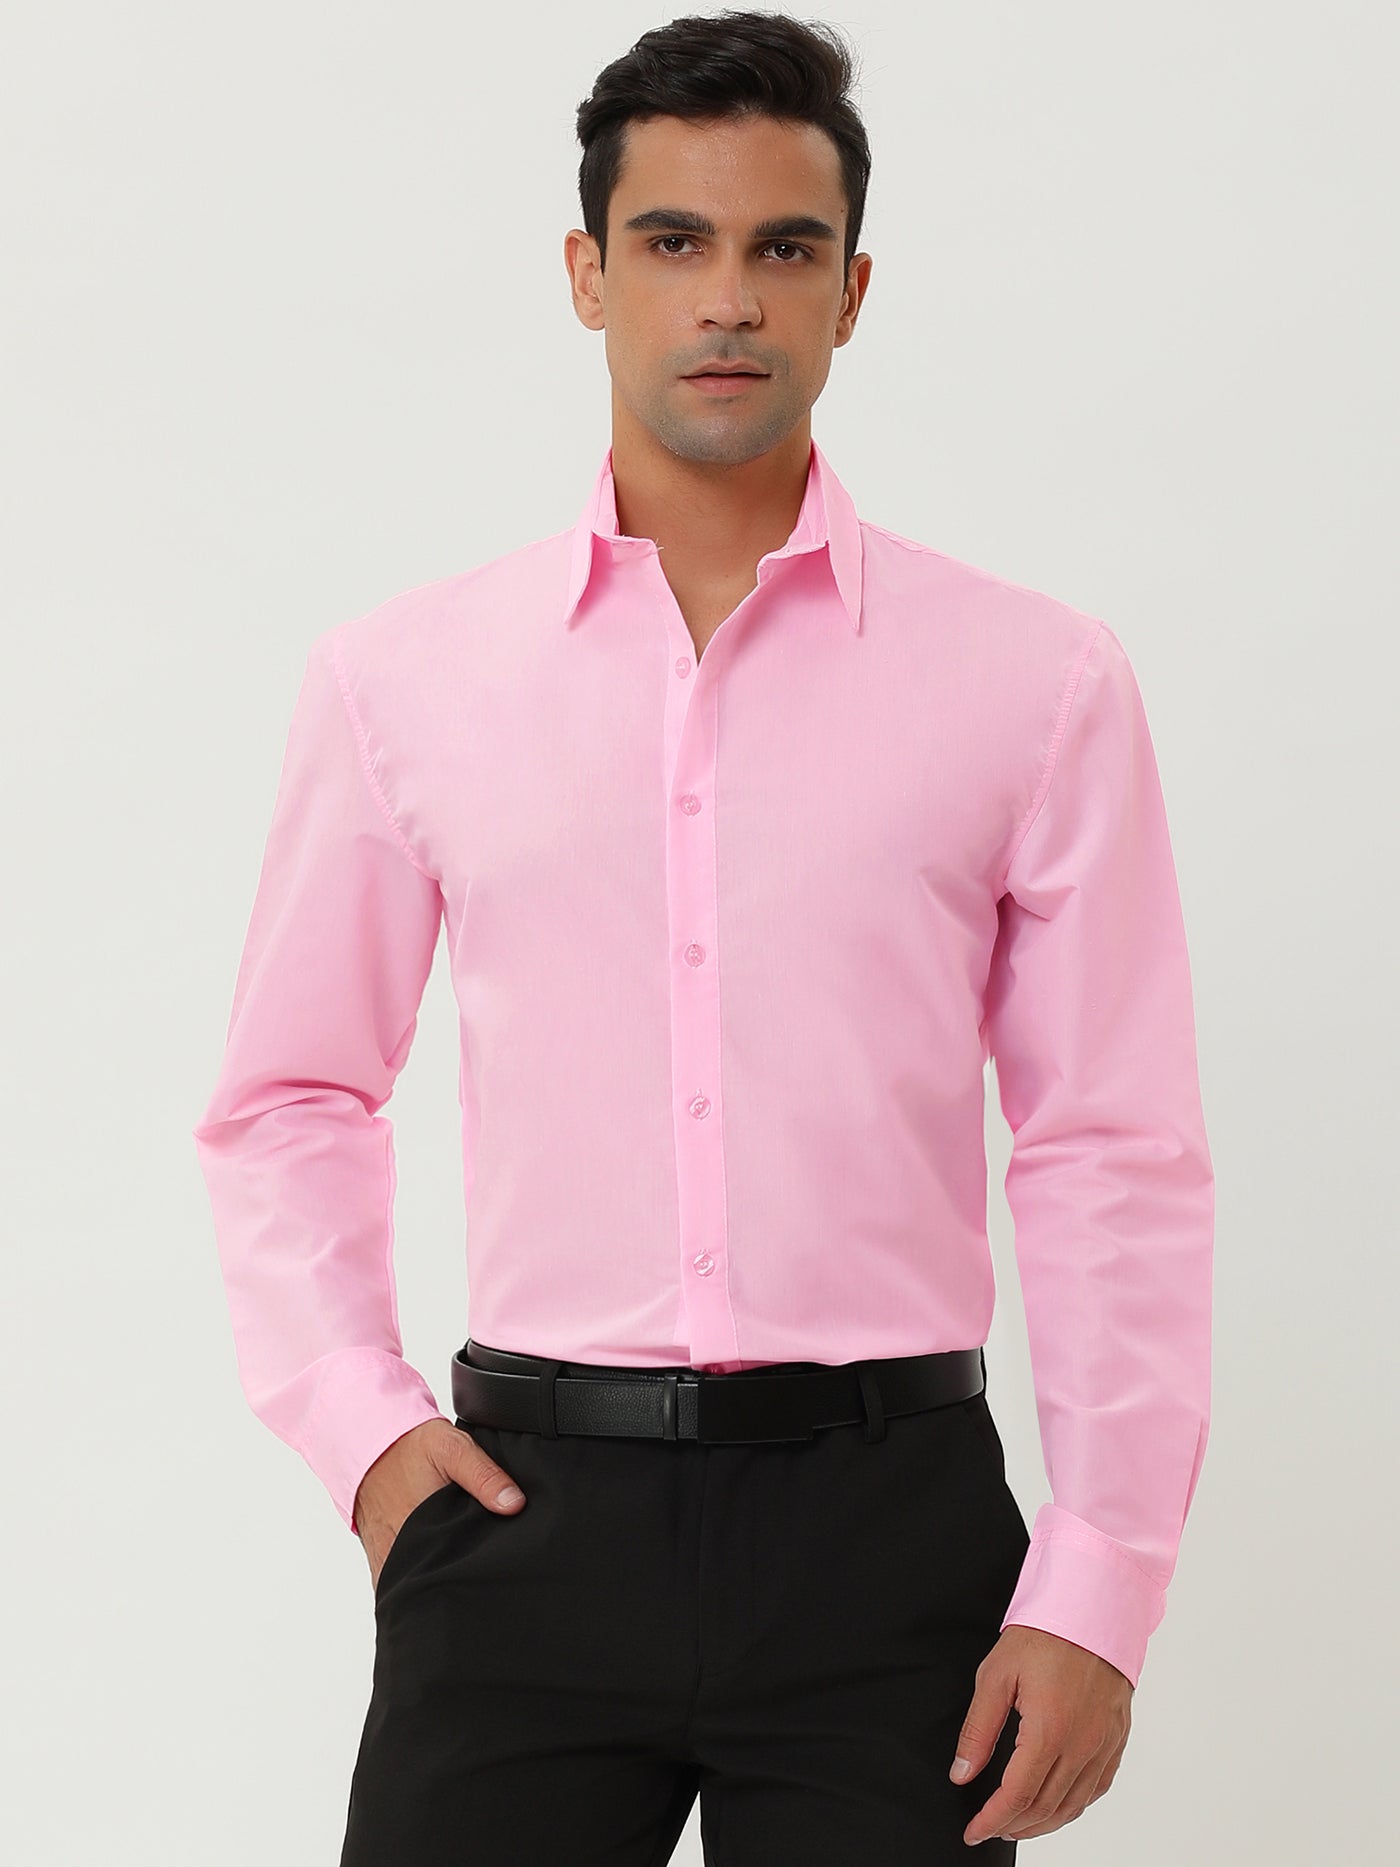 Bublédon Smart Casual Lapel Long Sleeve Button Solid Shirts